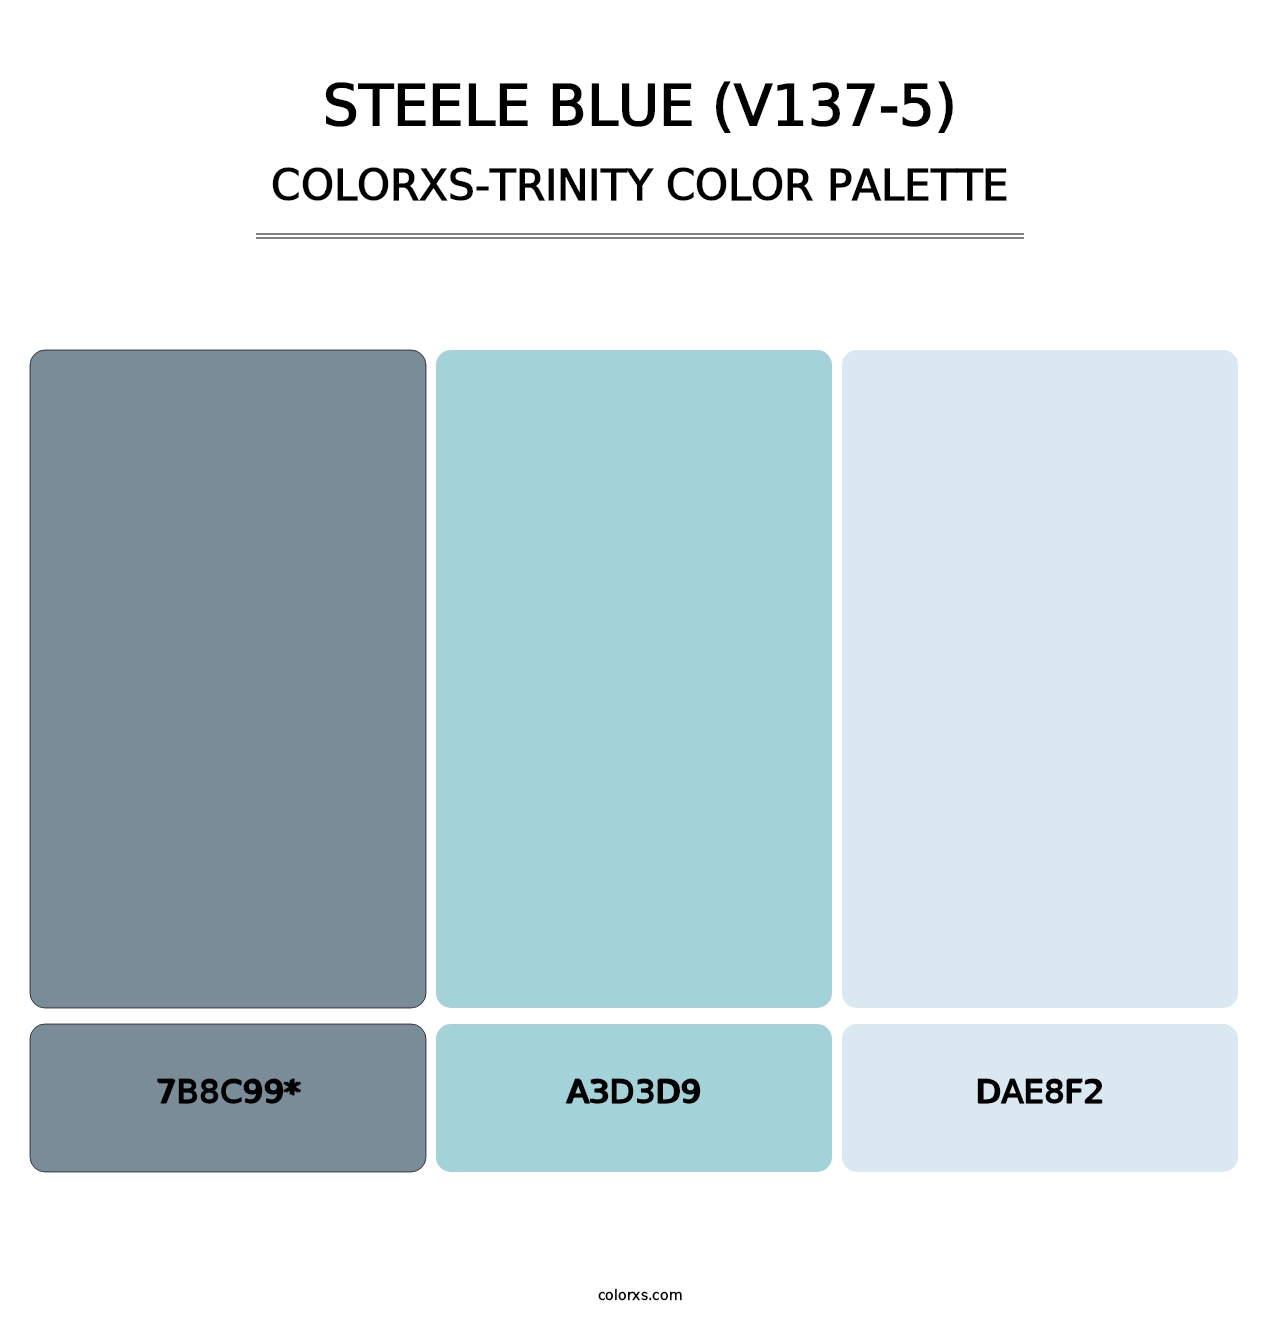 Steele Blue (V137-5) - Colorxs Trinity Palette